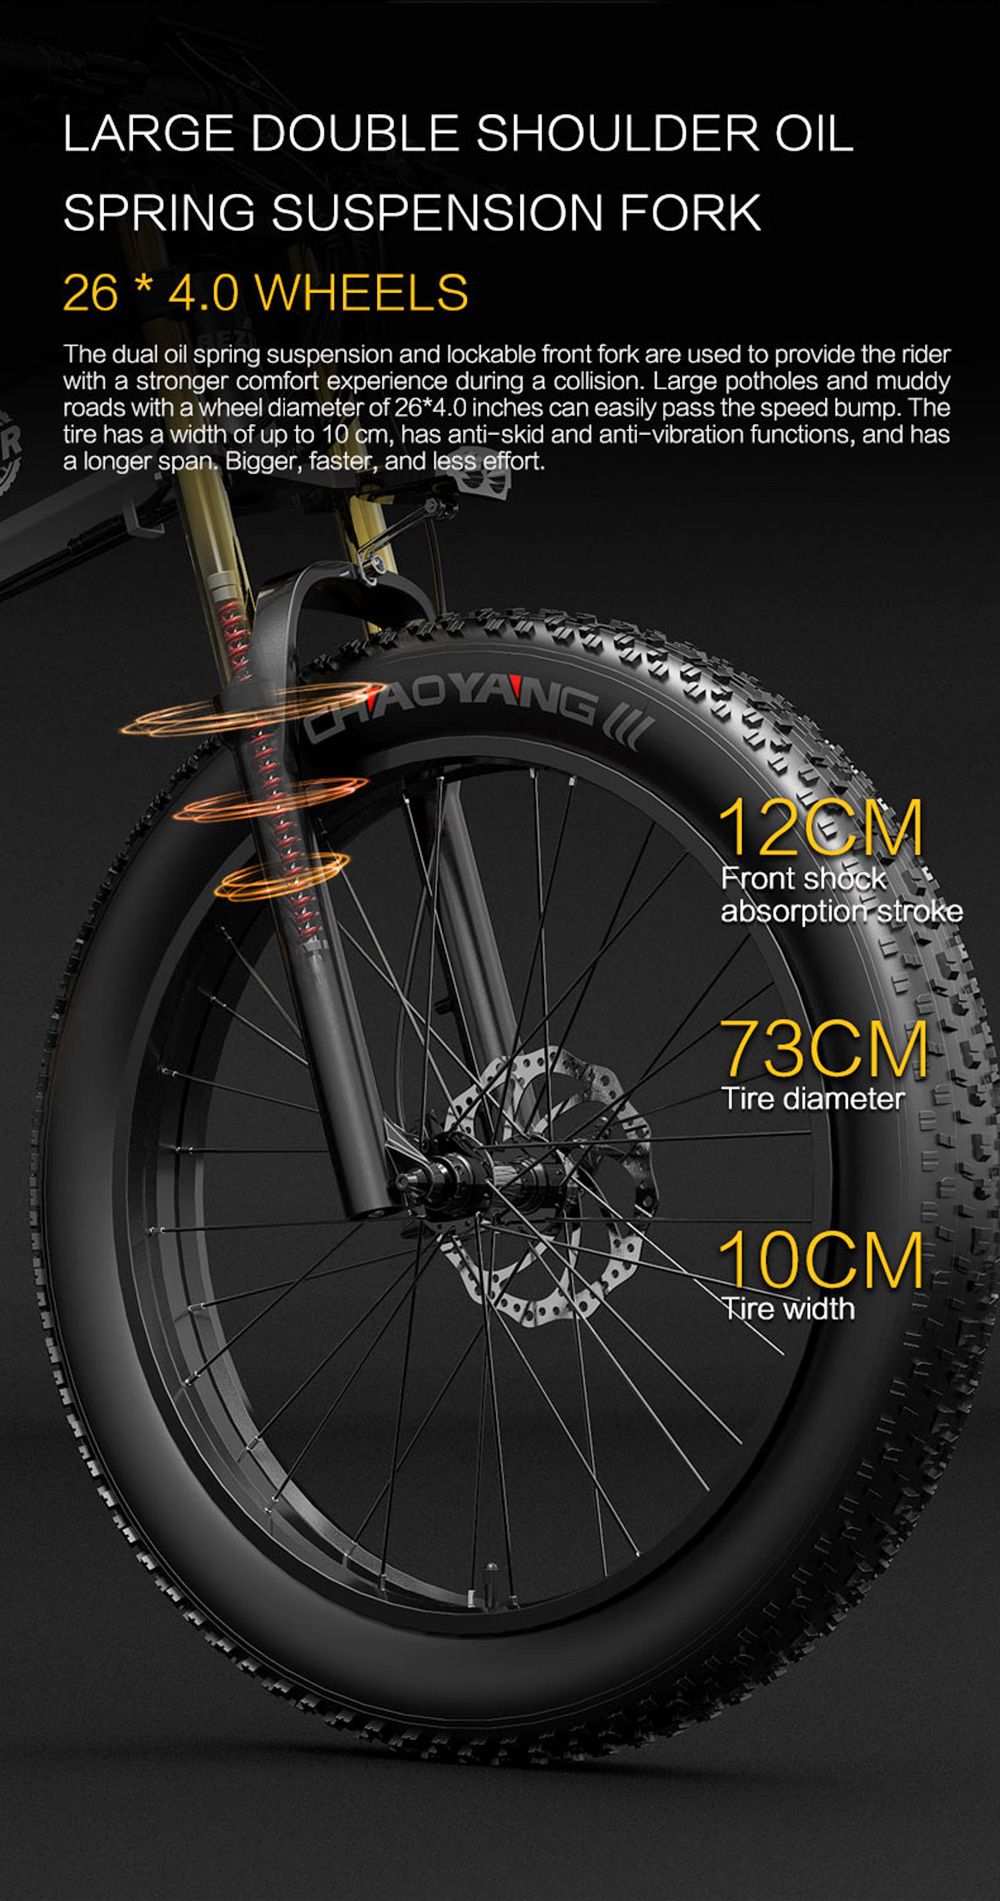 BEZIOR X-PLUS elektrische fiets 26 inch 1500 W 40 km/u 48 V 17,5 Ah accu rood